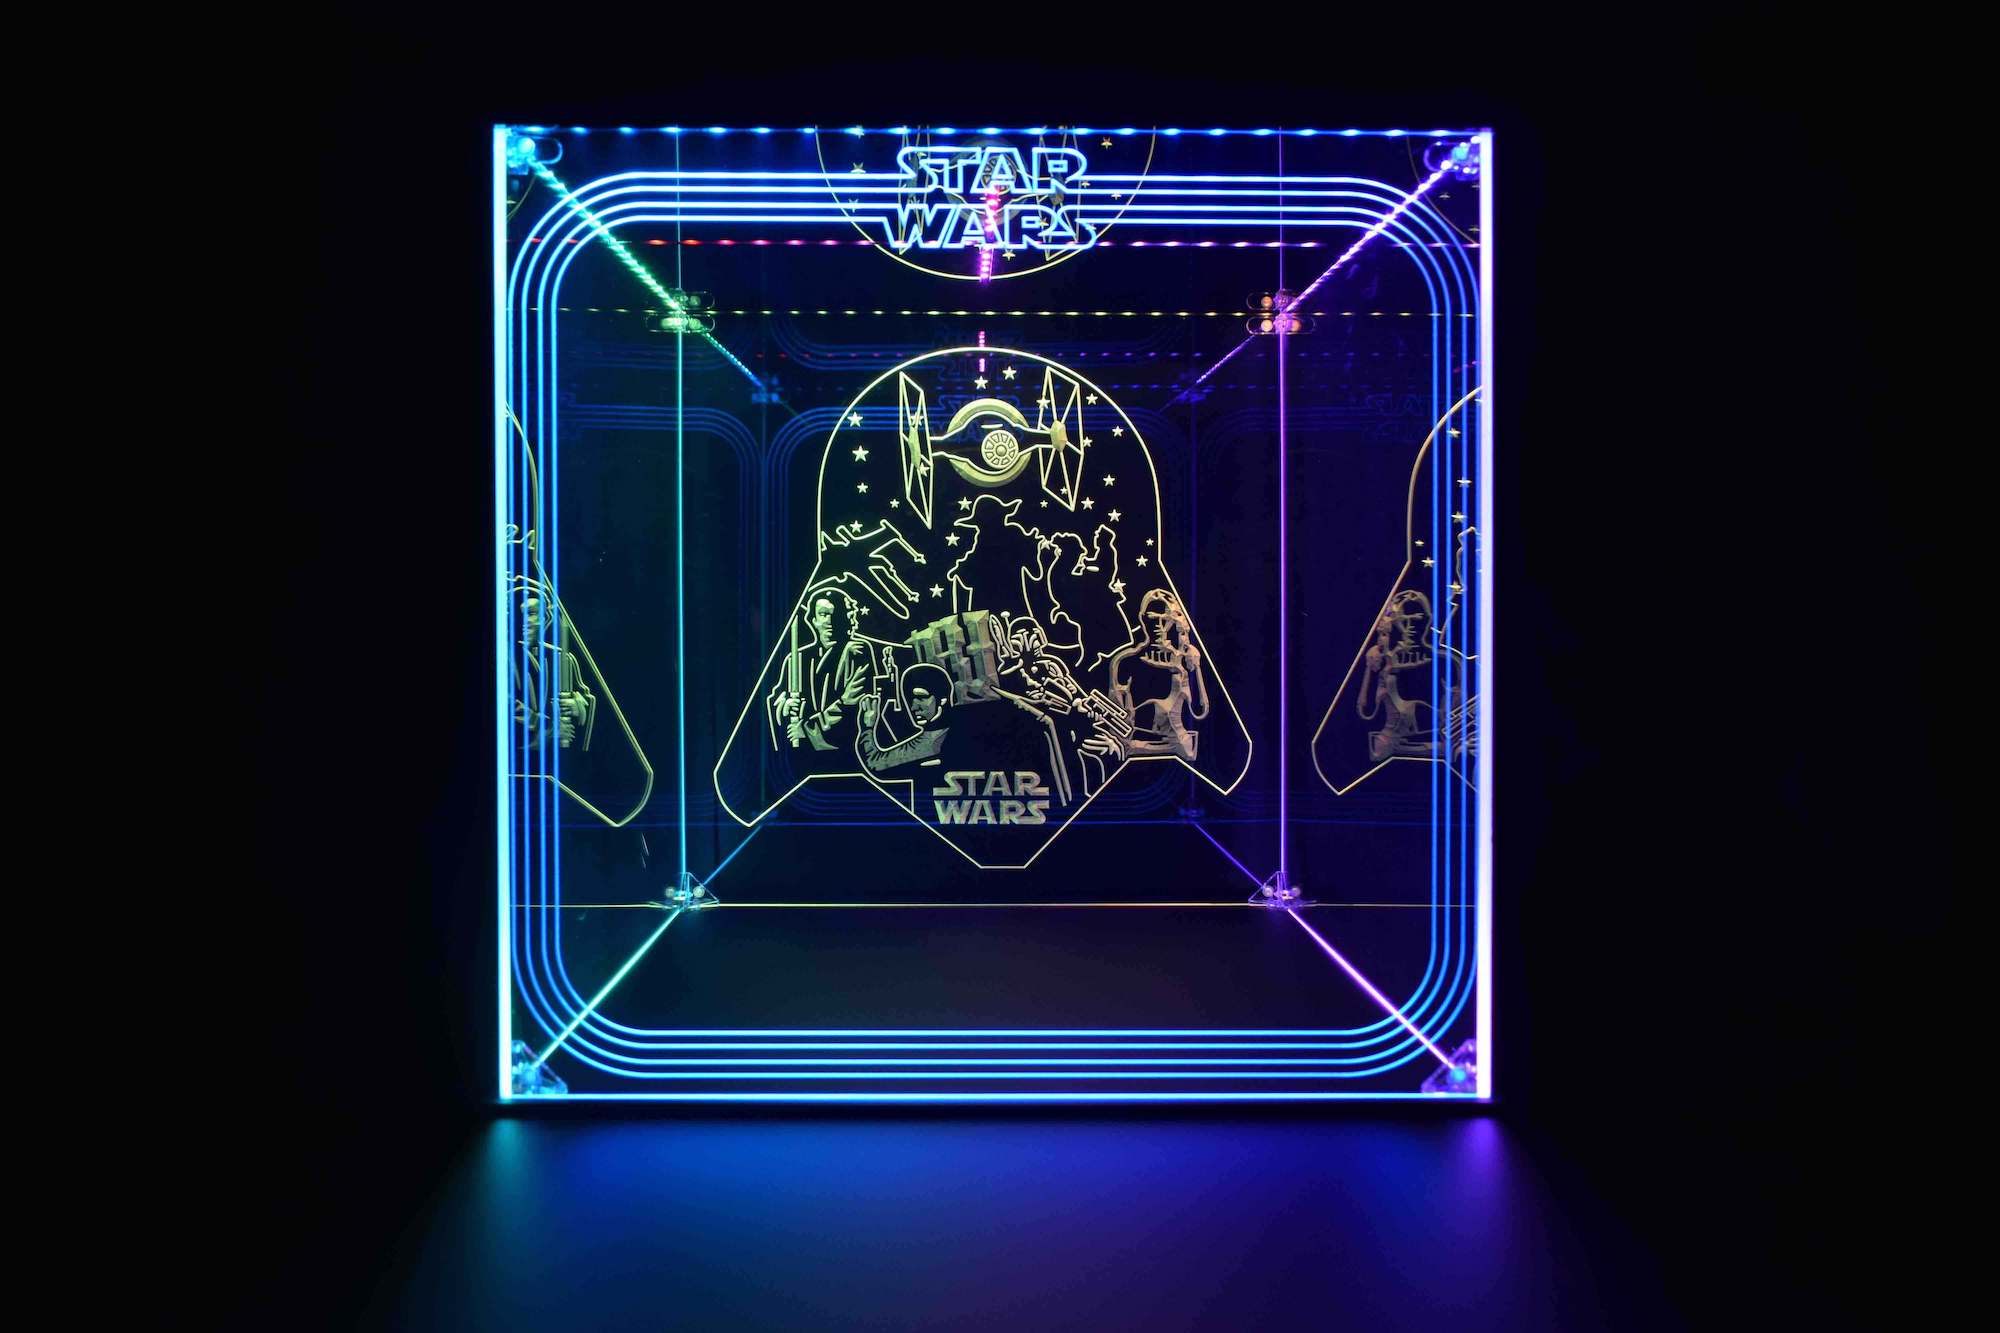 Custom LED Display Case For Lego Star Wars Sets, Lego Helmet, Collectible Figures